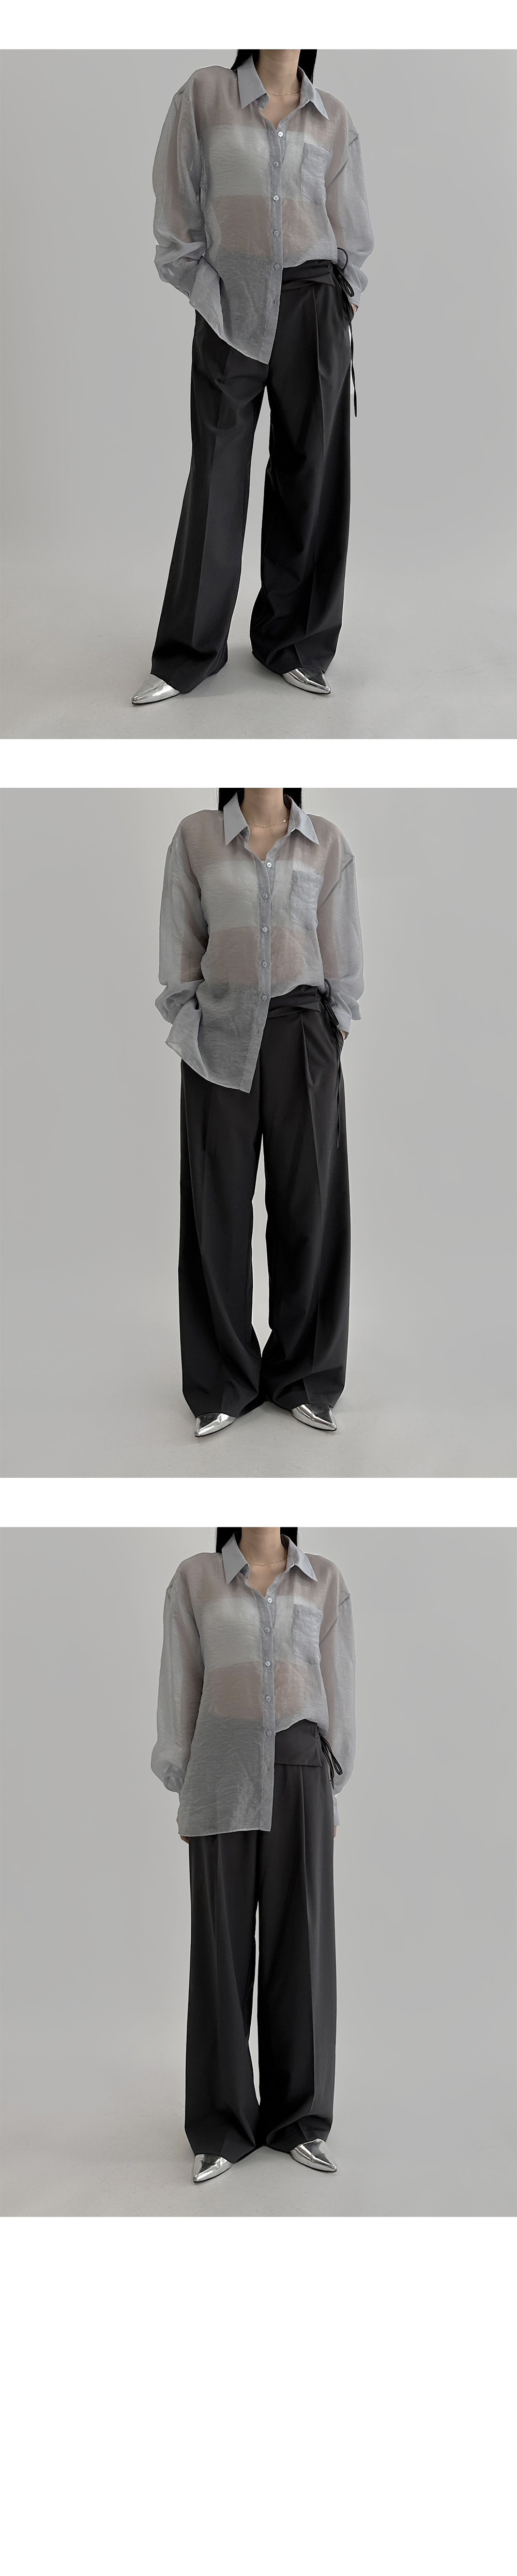 suspenders skirt/pants charcoal color image-S1L6